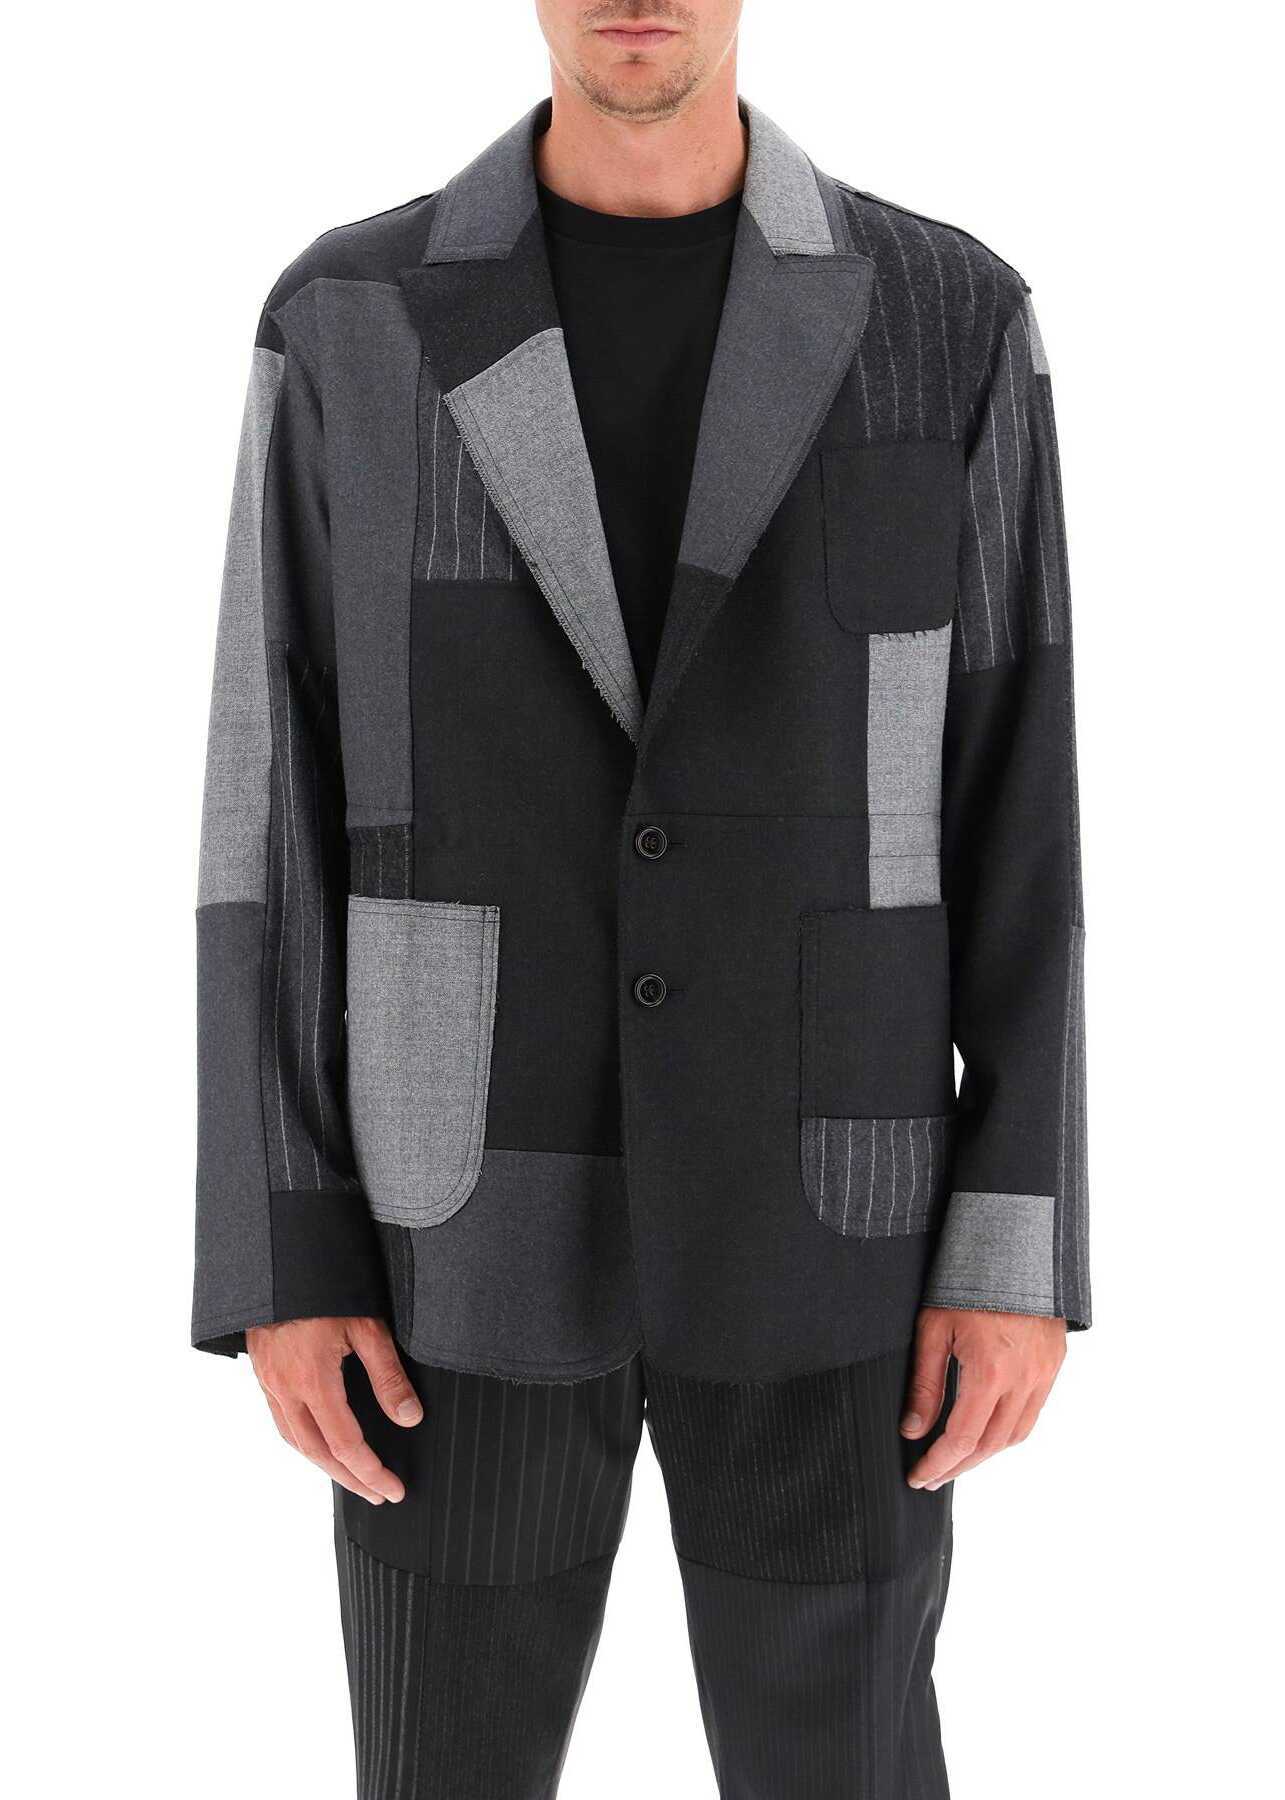 Dolce & Gabbana Patchwork Wool Jacket G2PQ3T GES55 VARIANTE ABBINATA image0